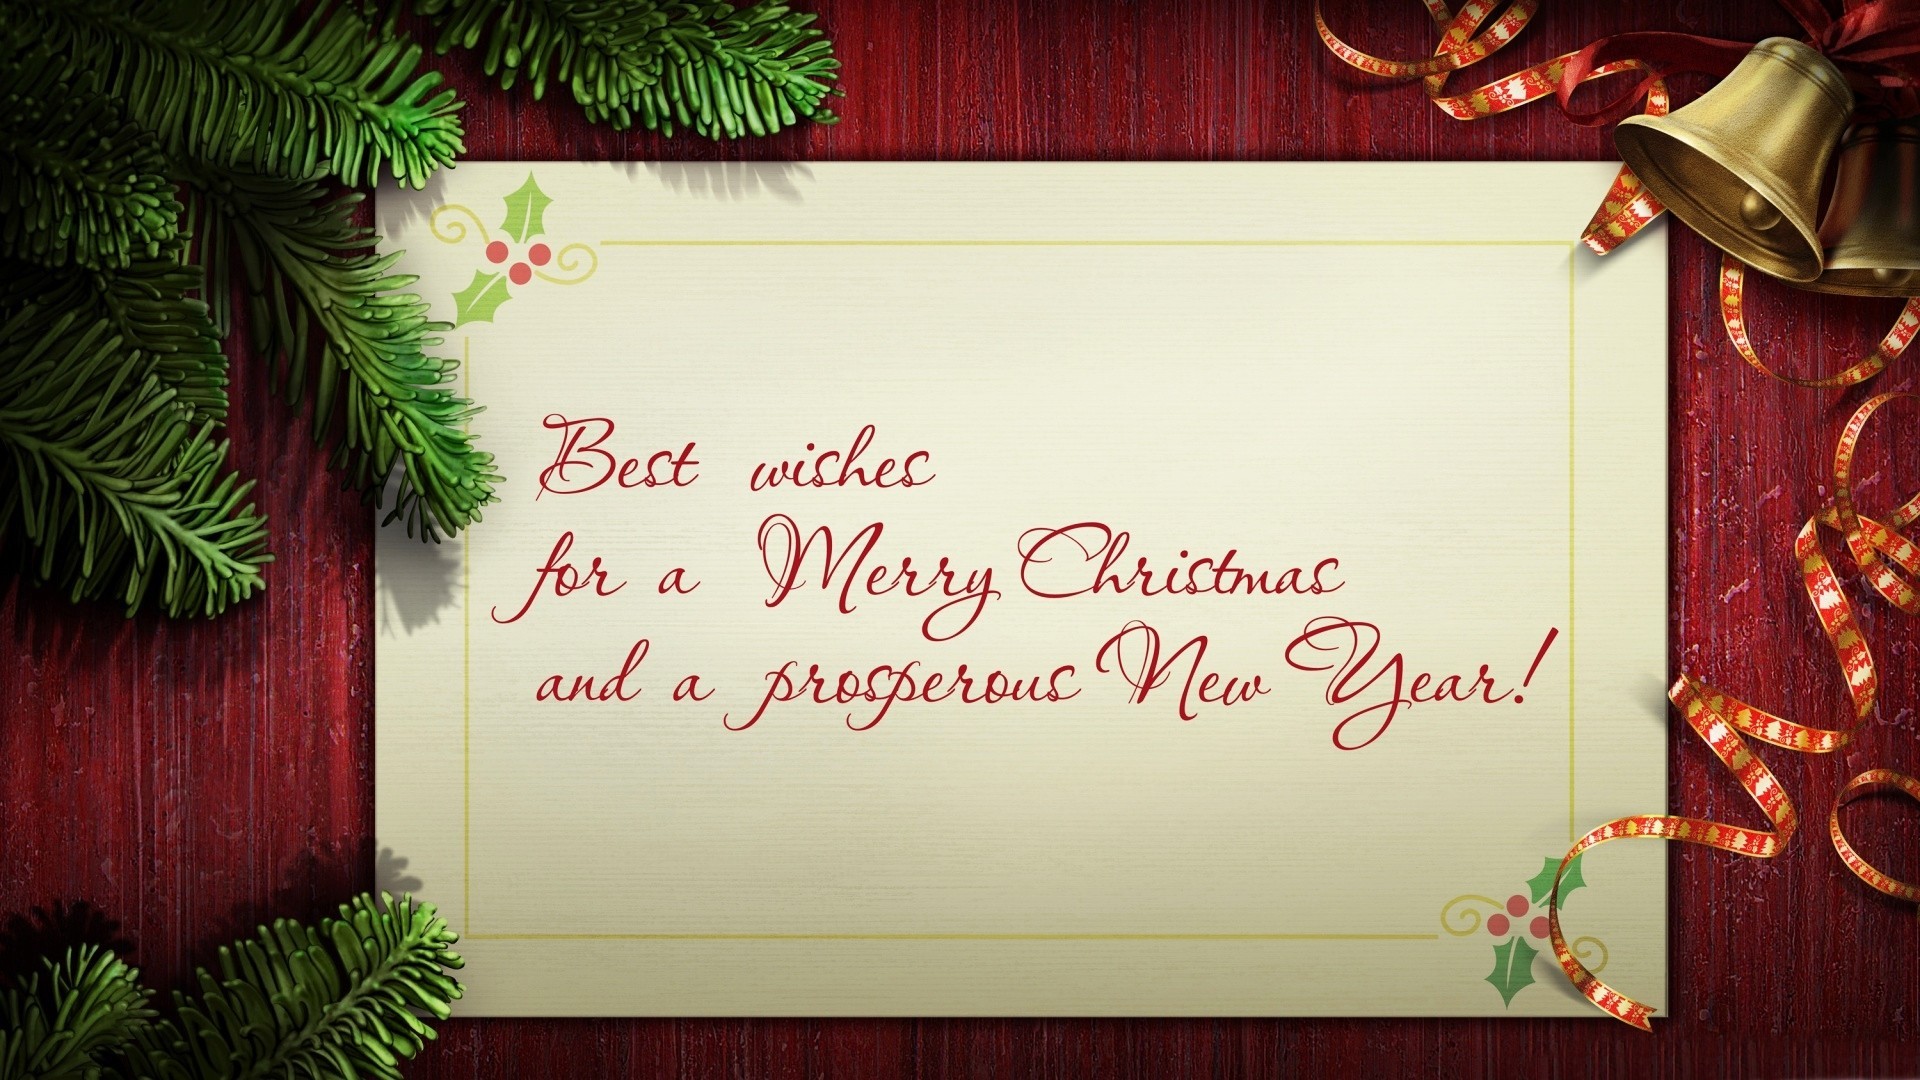 christmas-greetings-card-new-year-bells-2515709-1920x1080.jpg